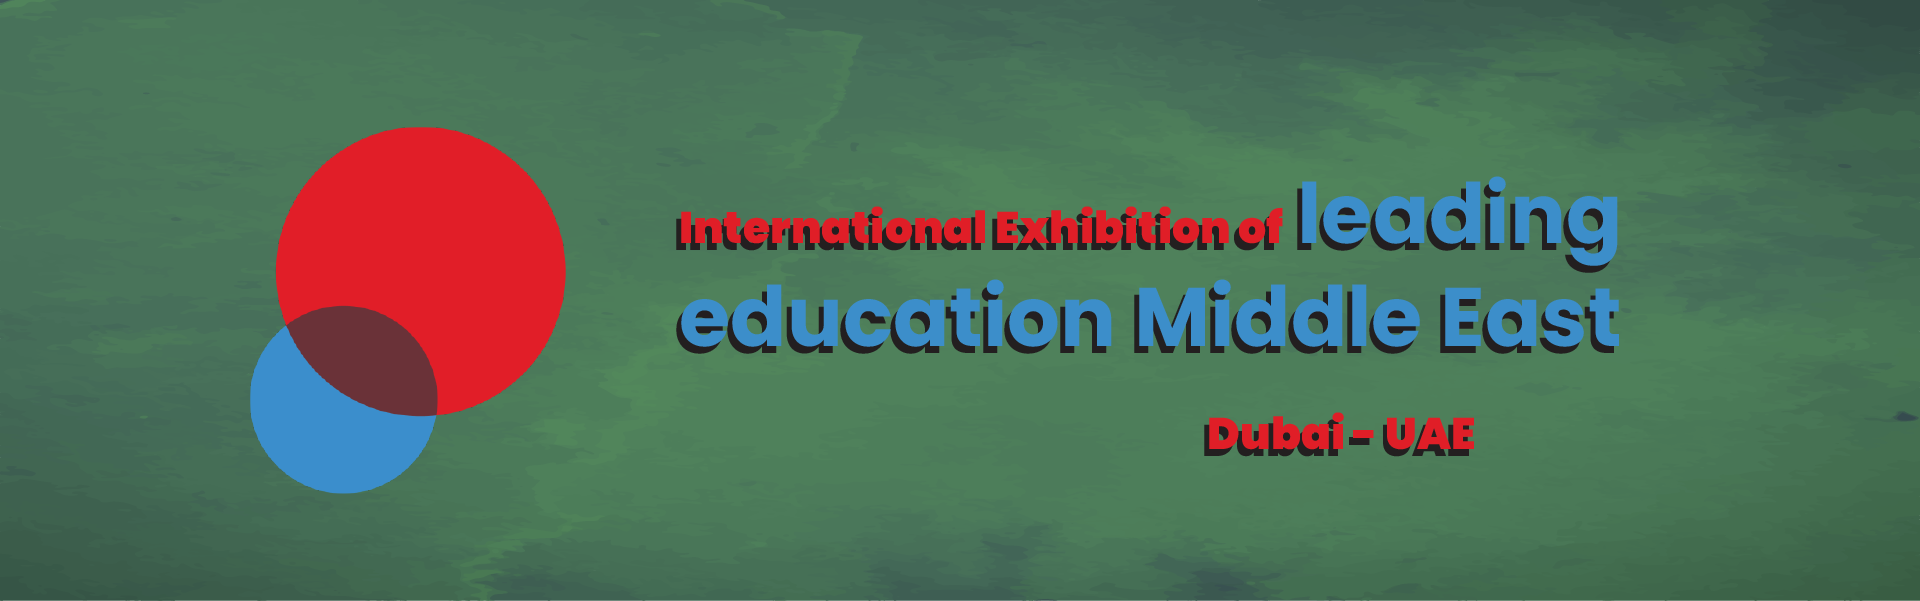 Educational Supplies & Solutions Exhibition Dubai United Arab Emirates